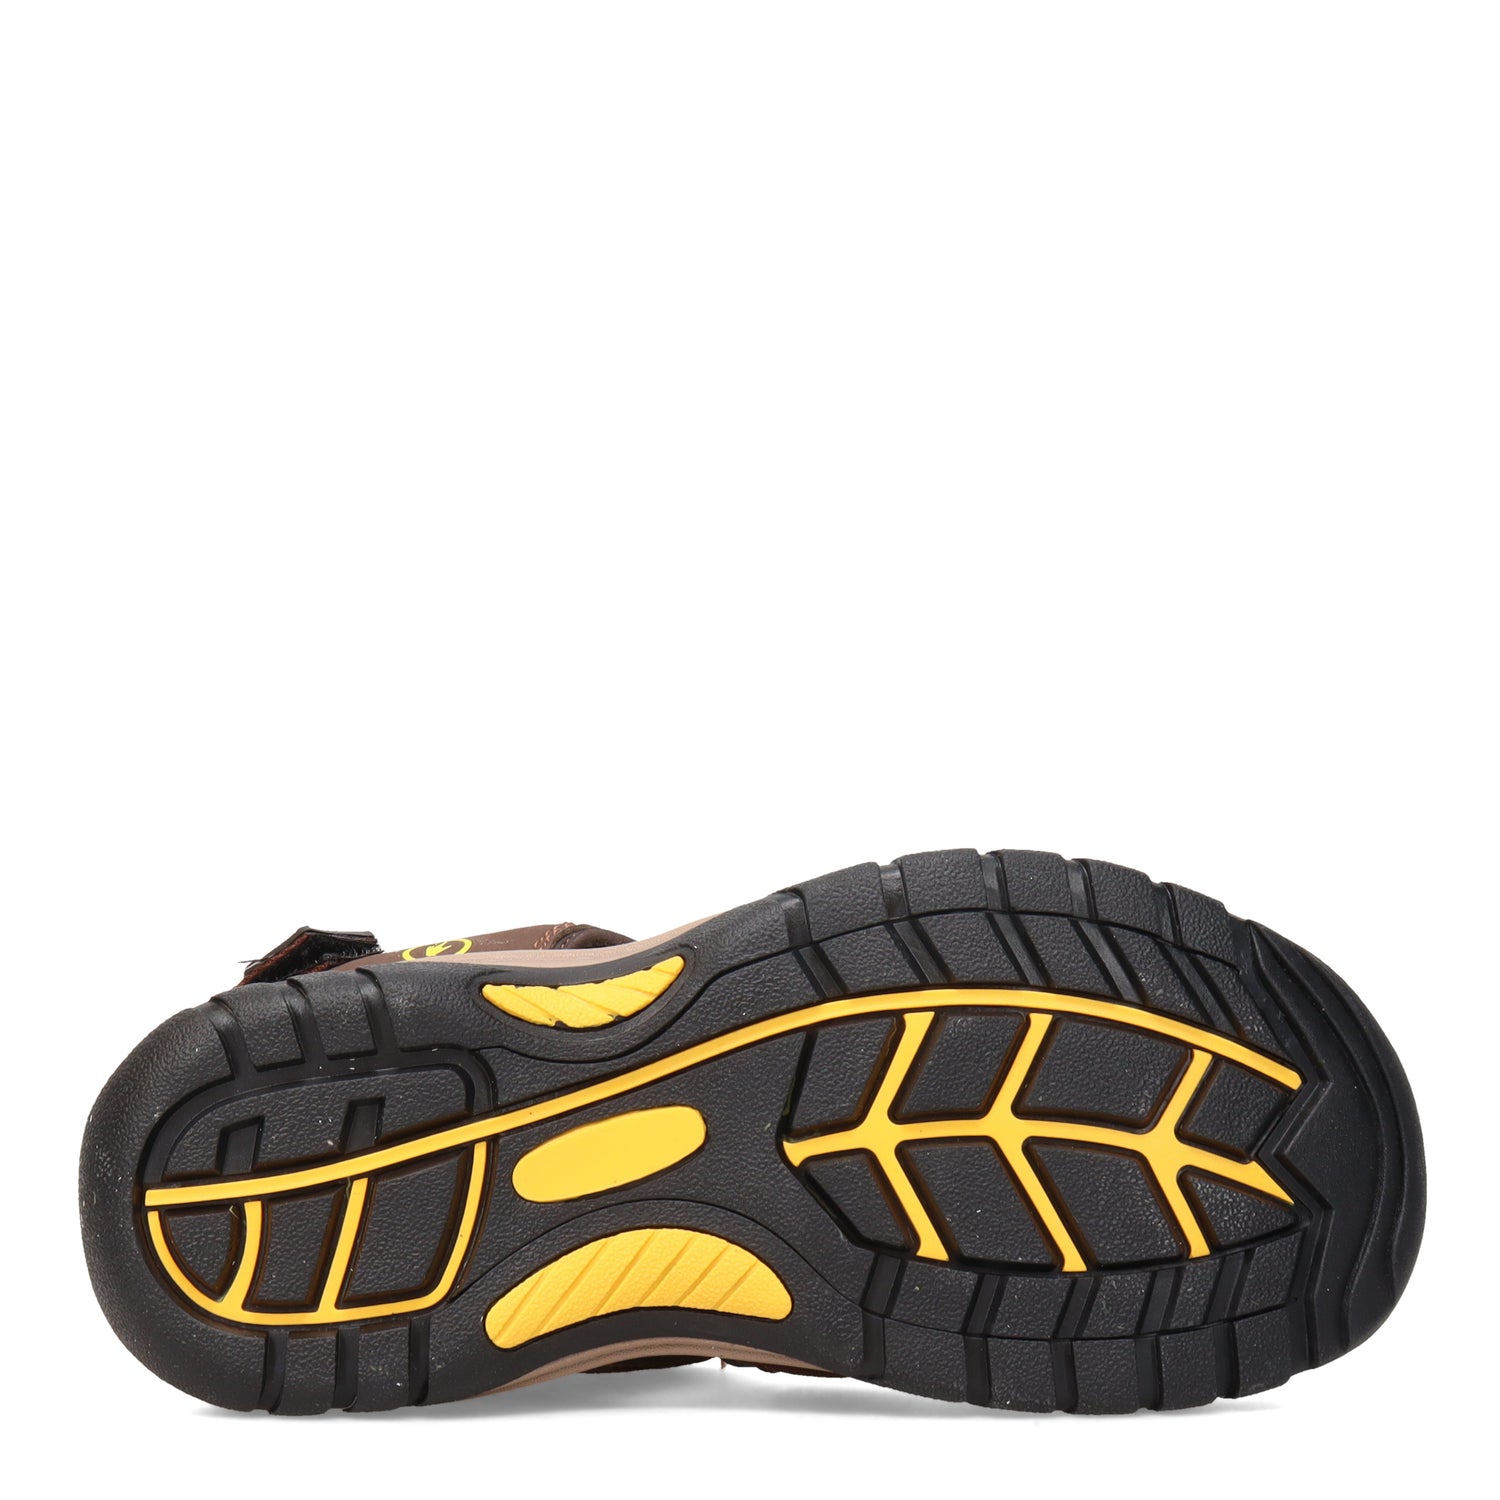 Peltz Shoes  Men's Frogg Toggs River Sandal BROWN 4RS011-304